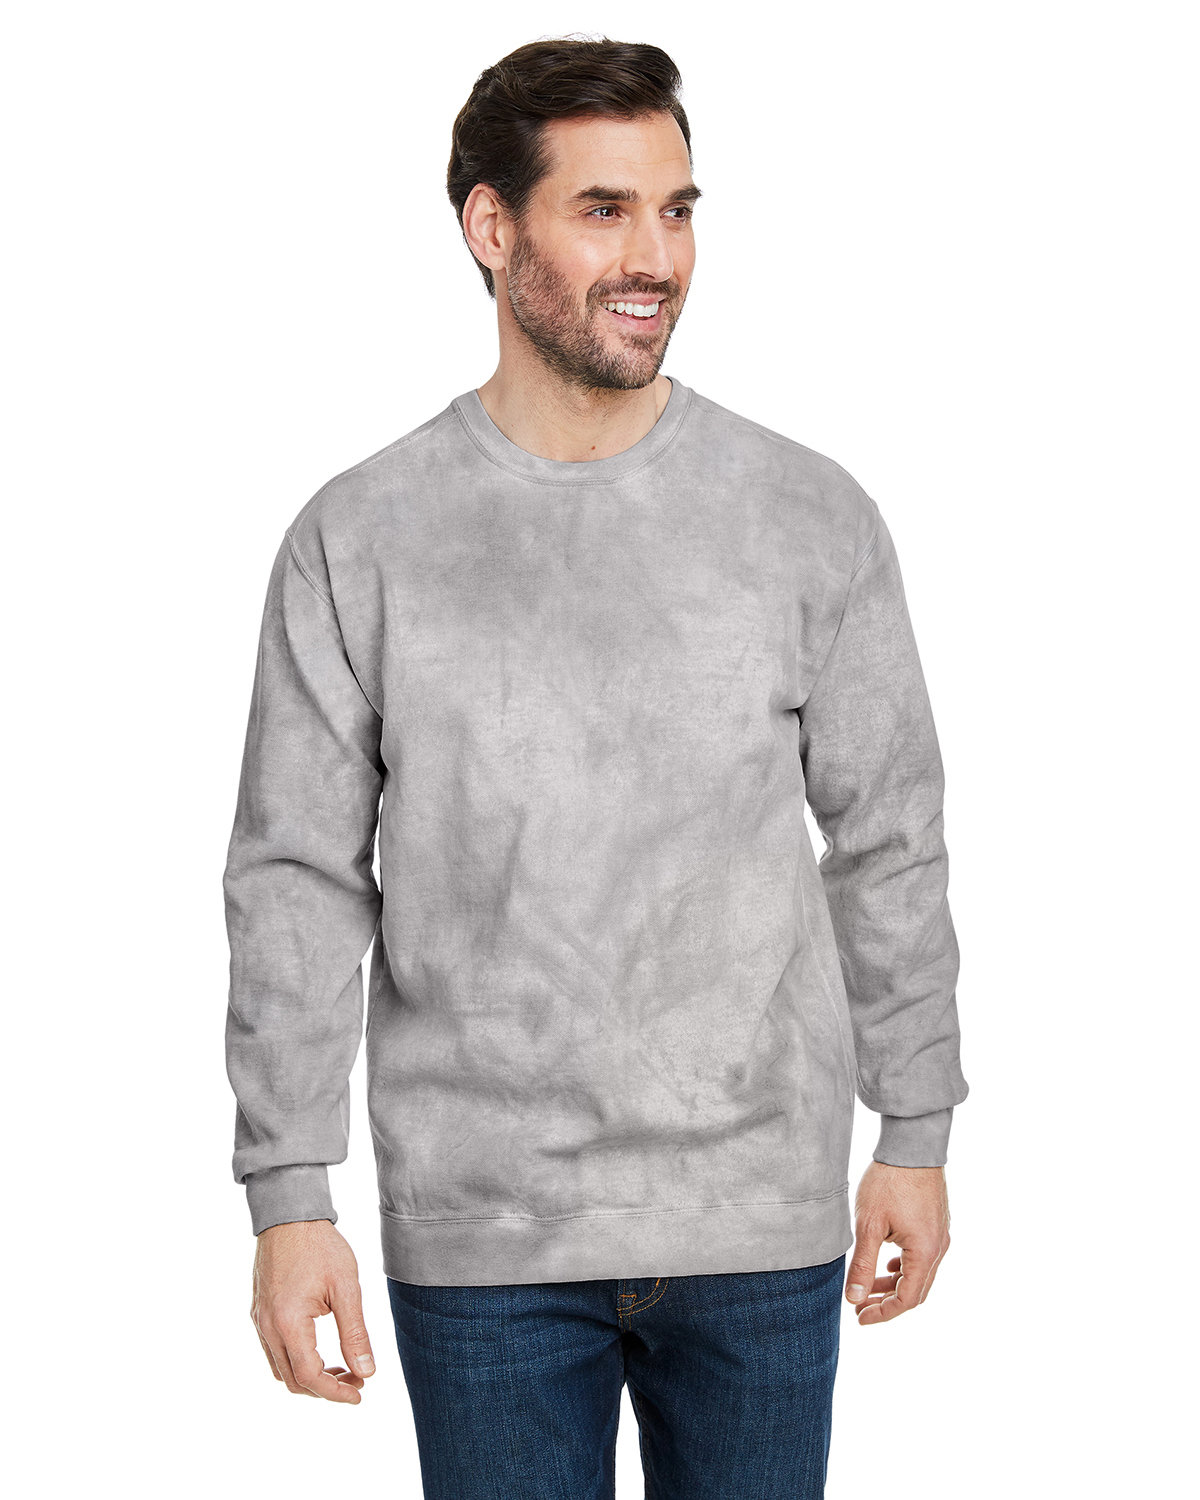 Adult Color Blast Crewneck Sweatshirt-Comfort Colors